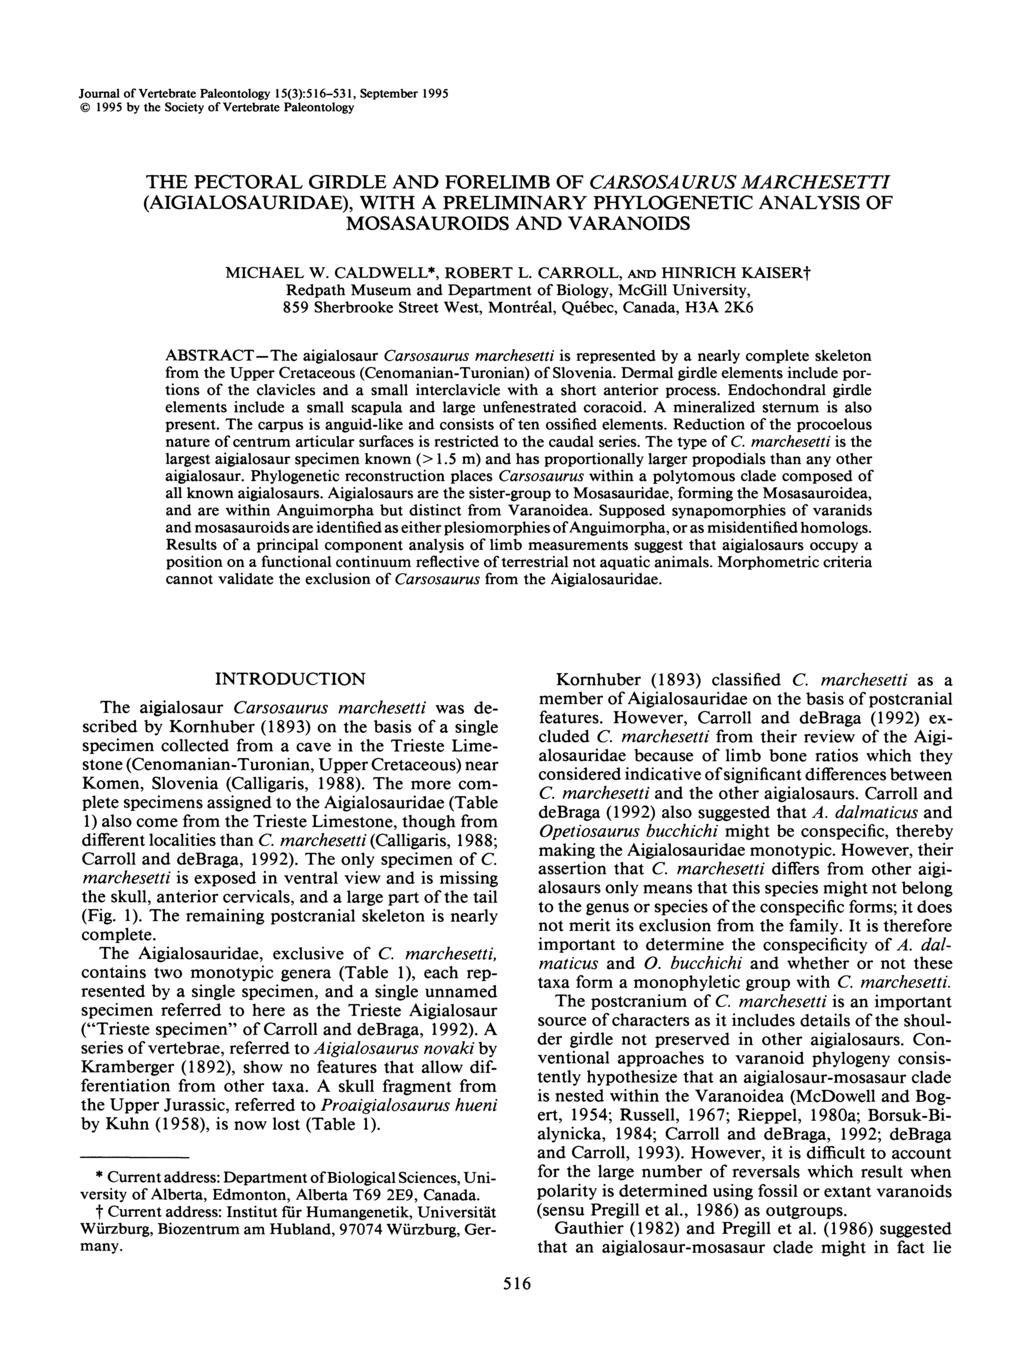 Journal of Vertebrate Paleontology 15(3):516-531, September 1995 1995 by the Society ofvertebrate Paleontology THE PECTORAL GIRDLE AND FORELIMB OF CARSOSAURUS MARCHESETTI (AIGIALOSAURIDAE), WITH A